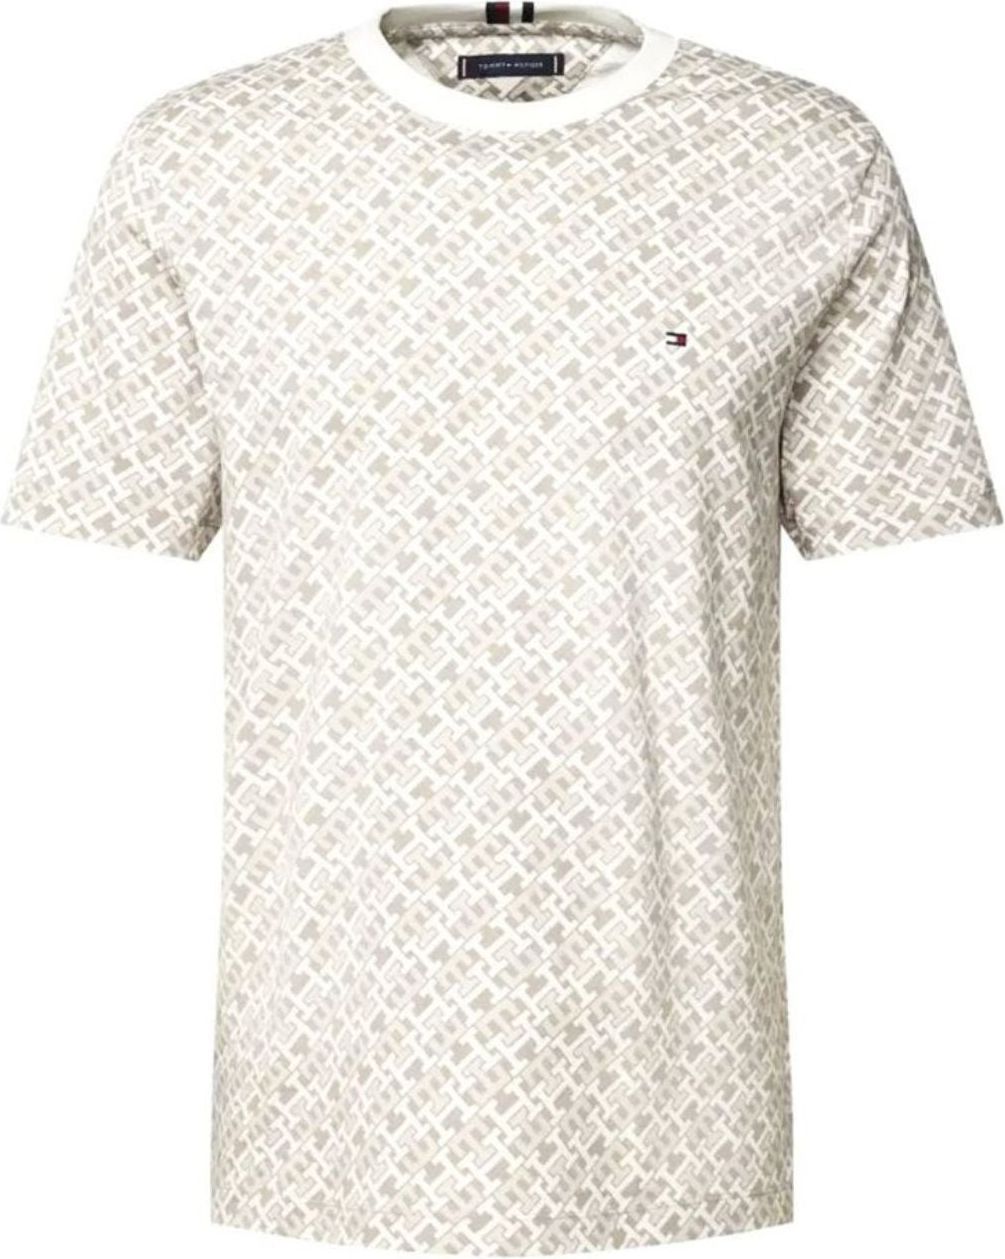 Tommy Hilfiger T-shirt Uomo con fantasia geometrica all over Grijs